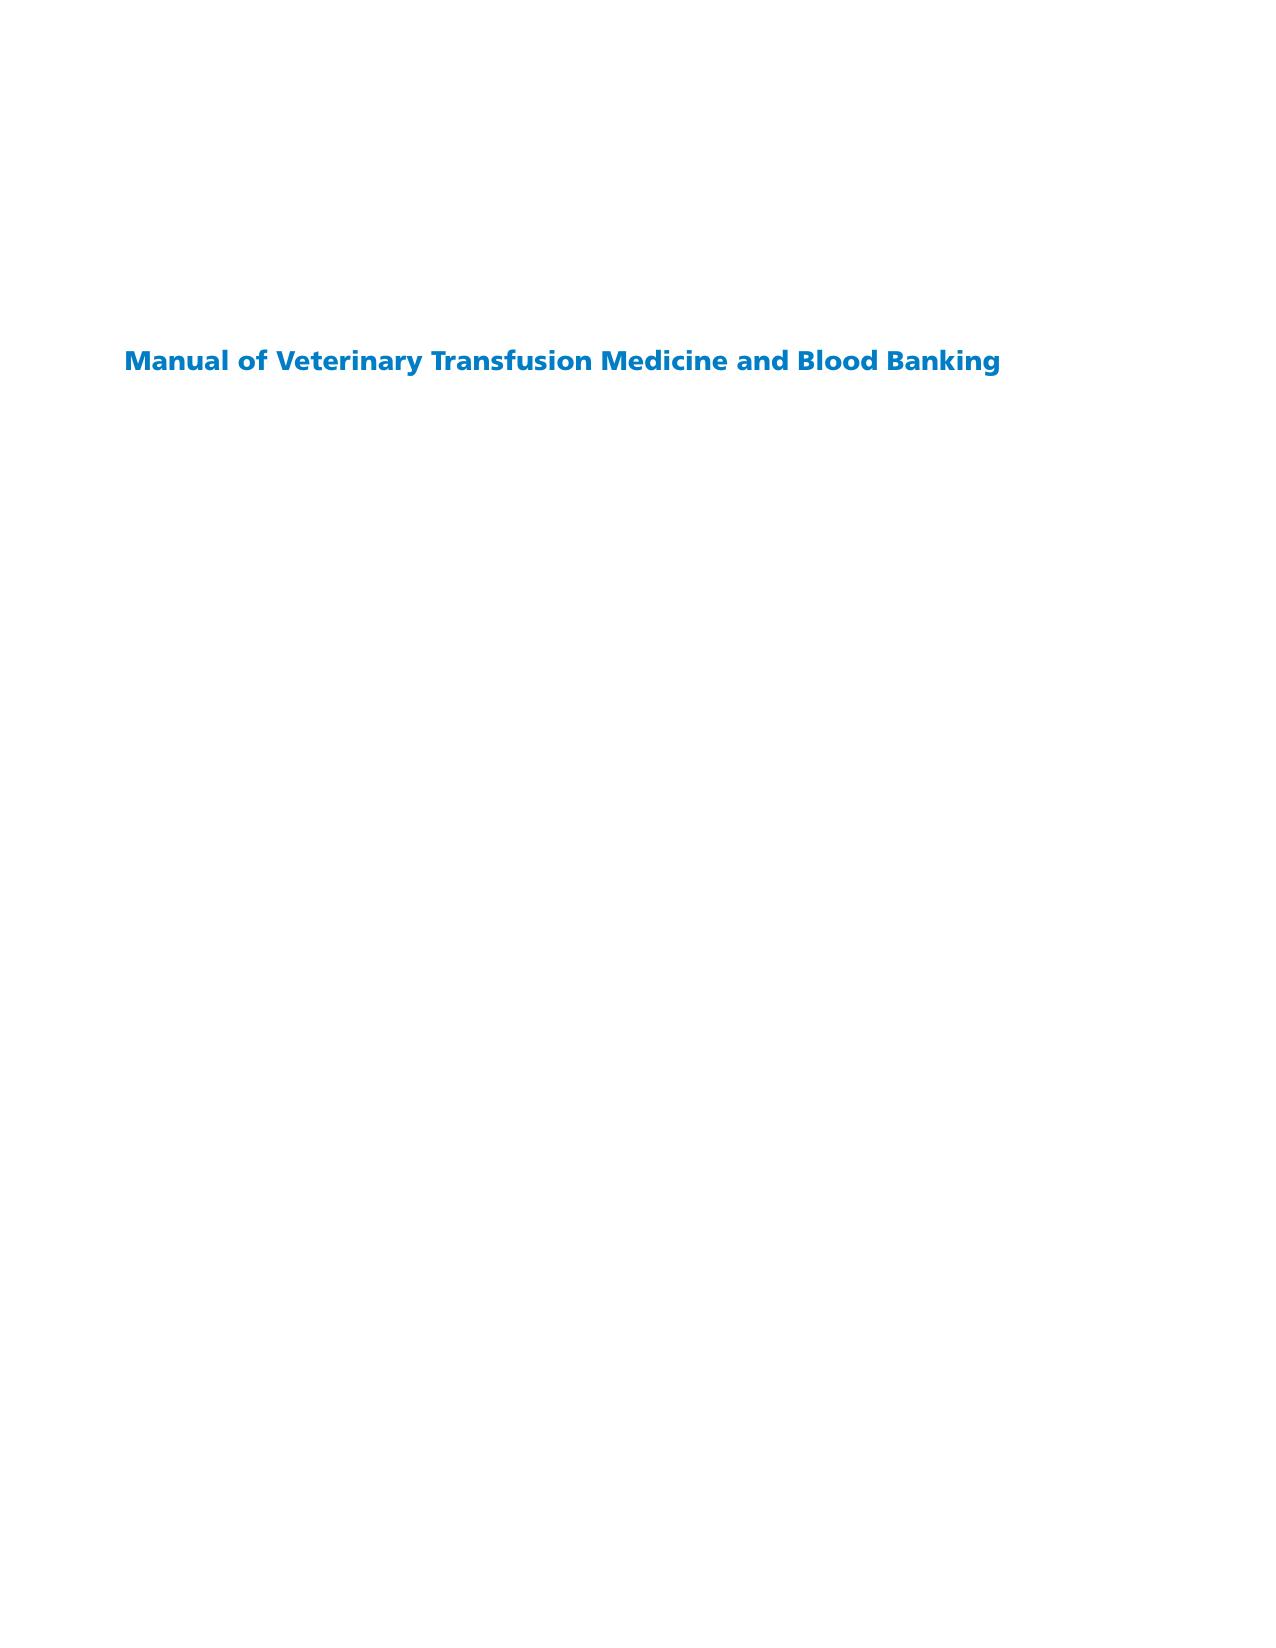 Manual of Veterinary Transfusion Medicine and Blood Banking 2016.pdf